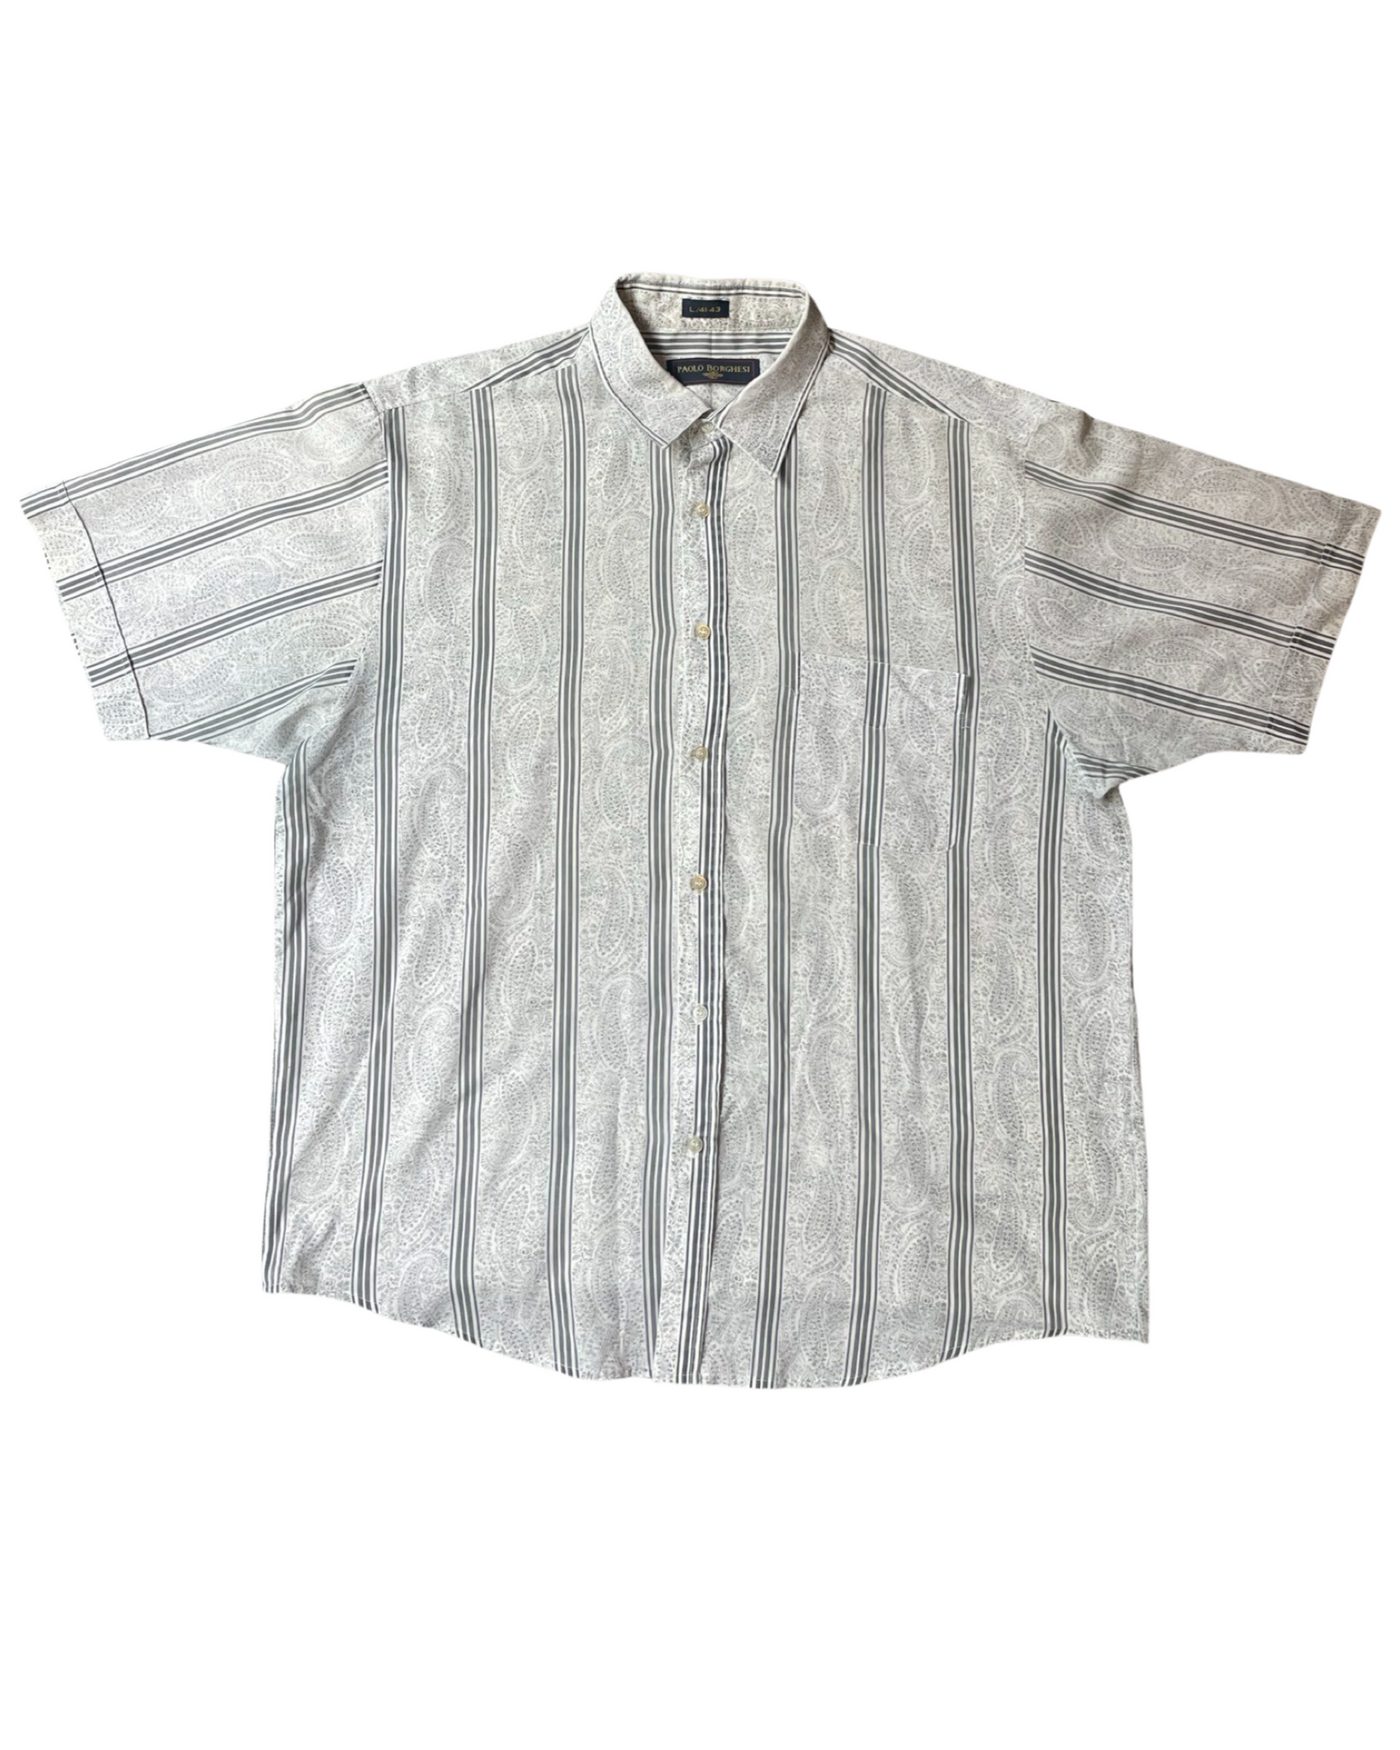 Vintage 90’s Pattern Shirt Size L